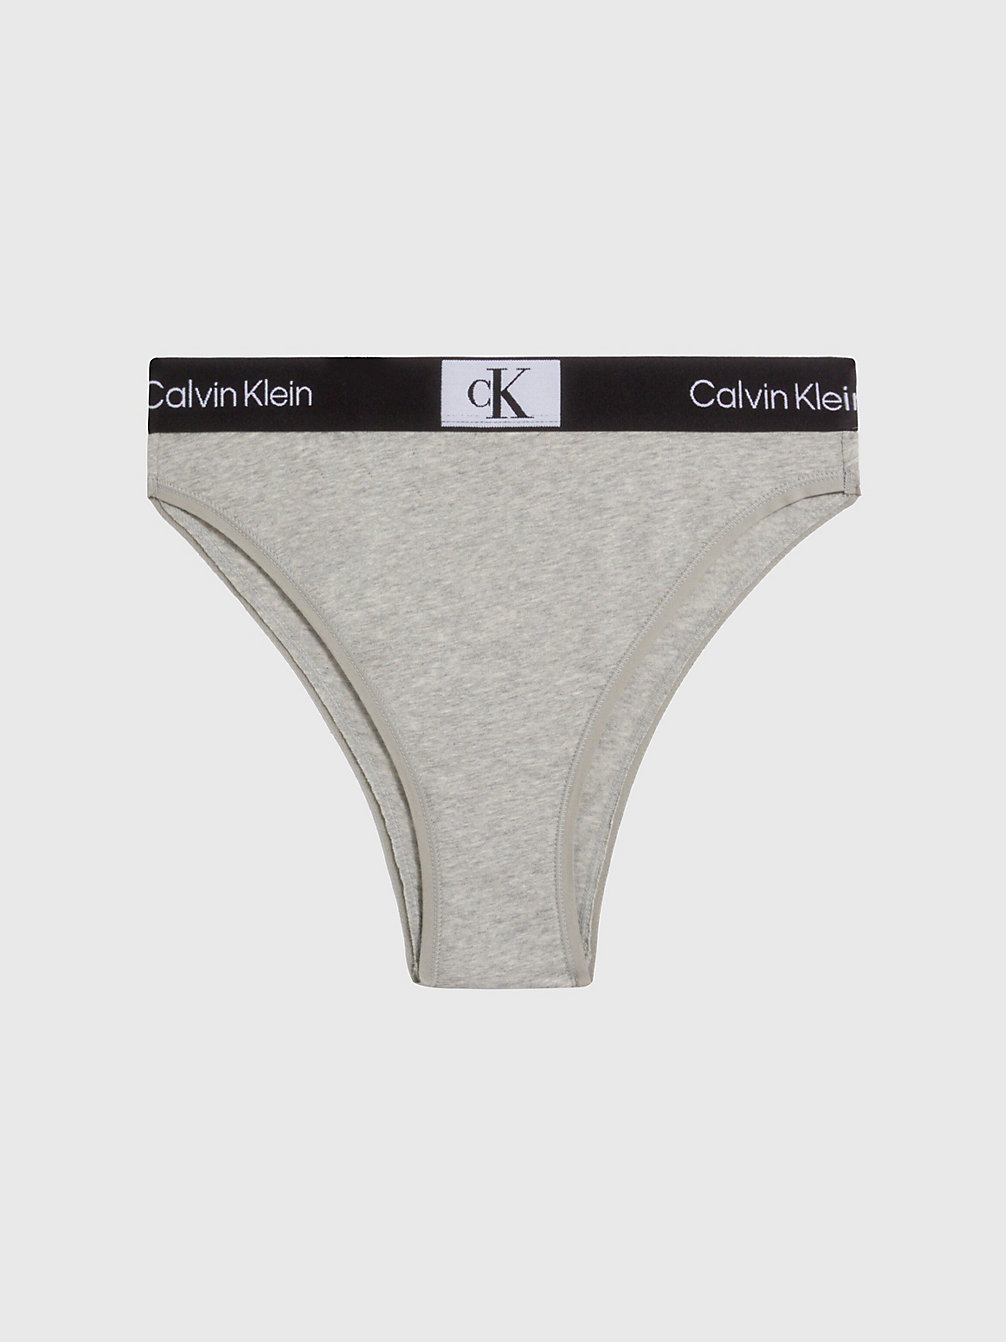 GREY HEATHER Culotte Brésilienne Taille Haute - Ck96 undefined femmes Calvin Klein